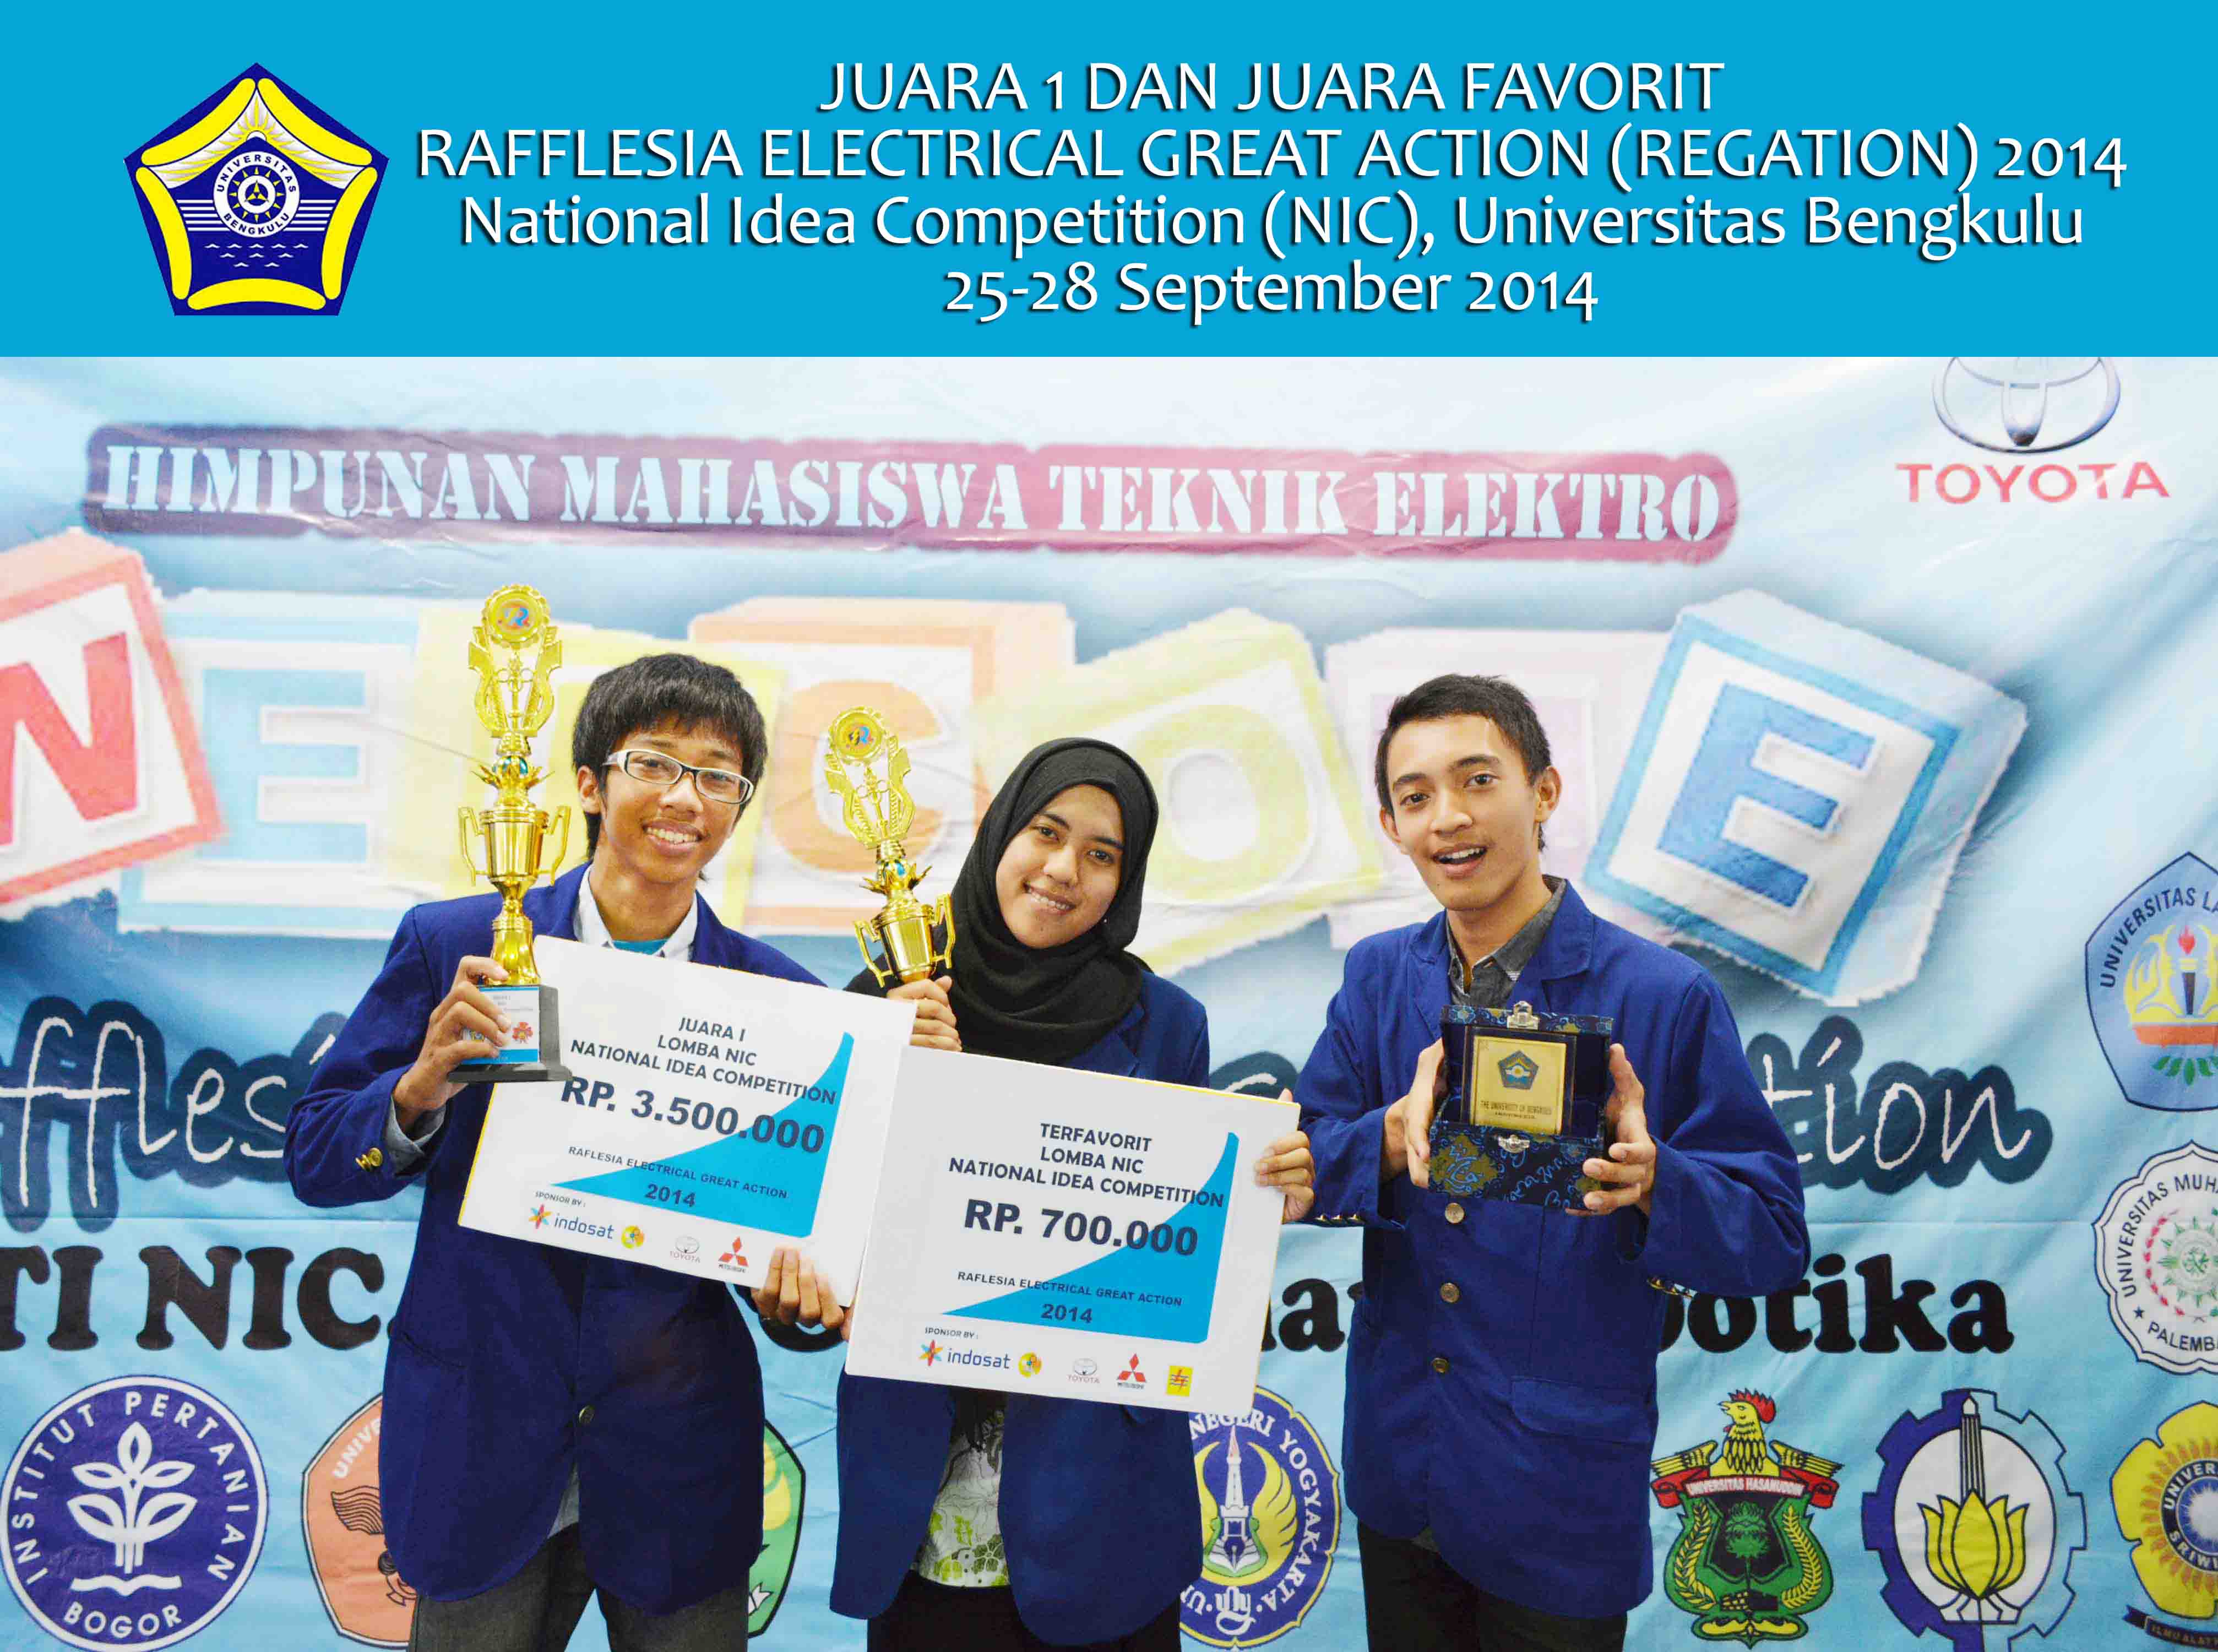 Foto National Idea Competition (NIC) “Rafflesia Electrical Great Action (REGATION)” Tahun 2014 di Universitas Bengkulu